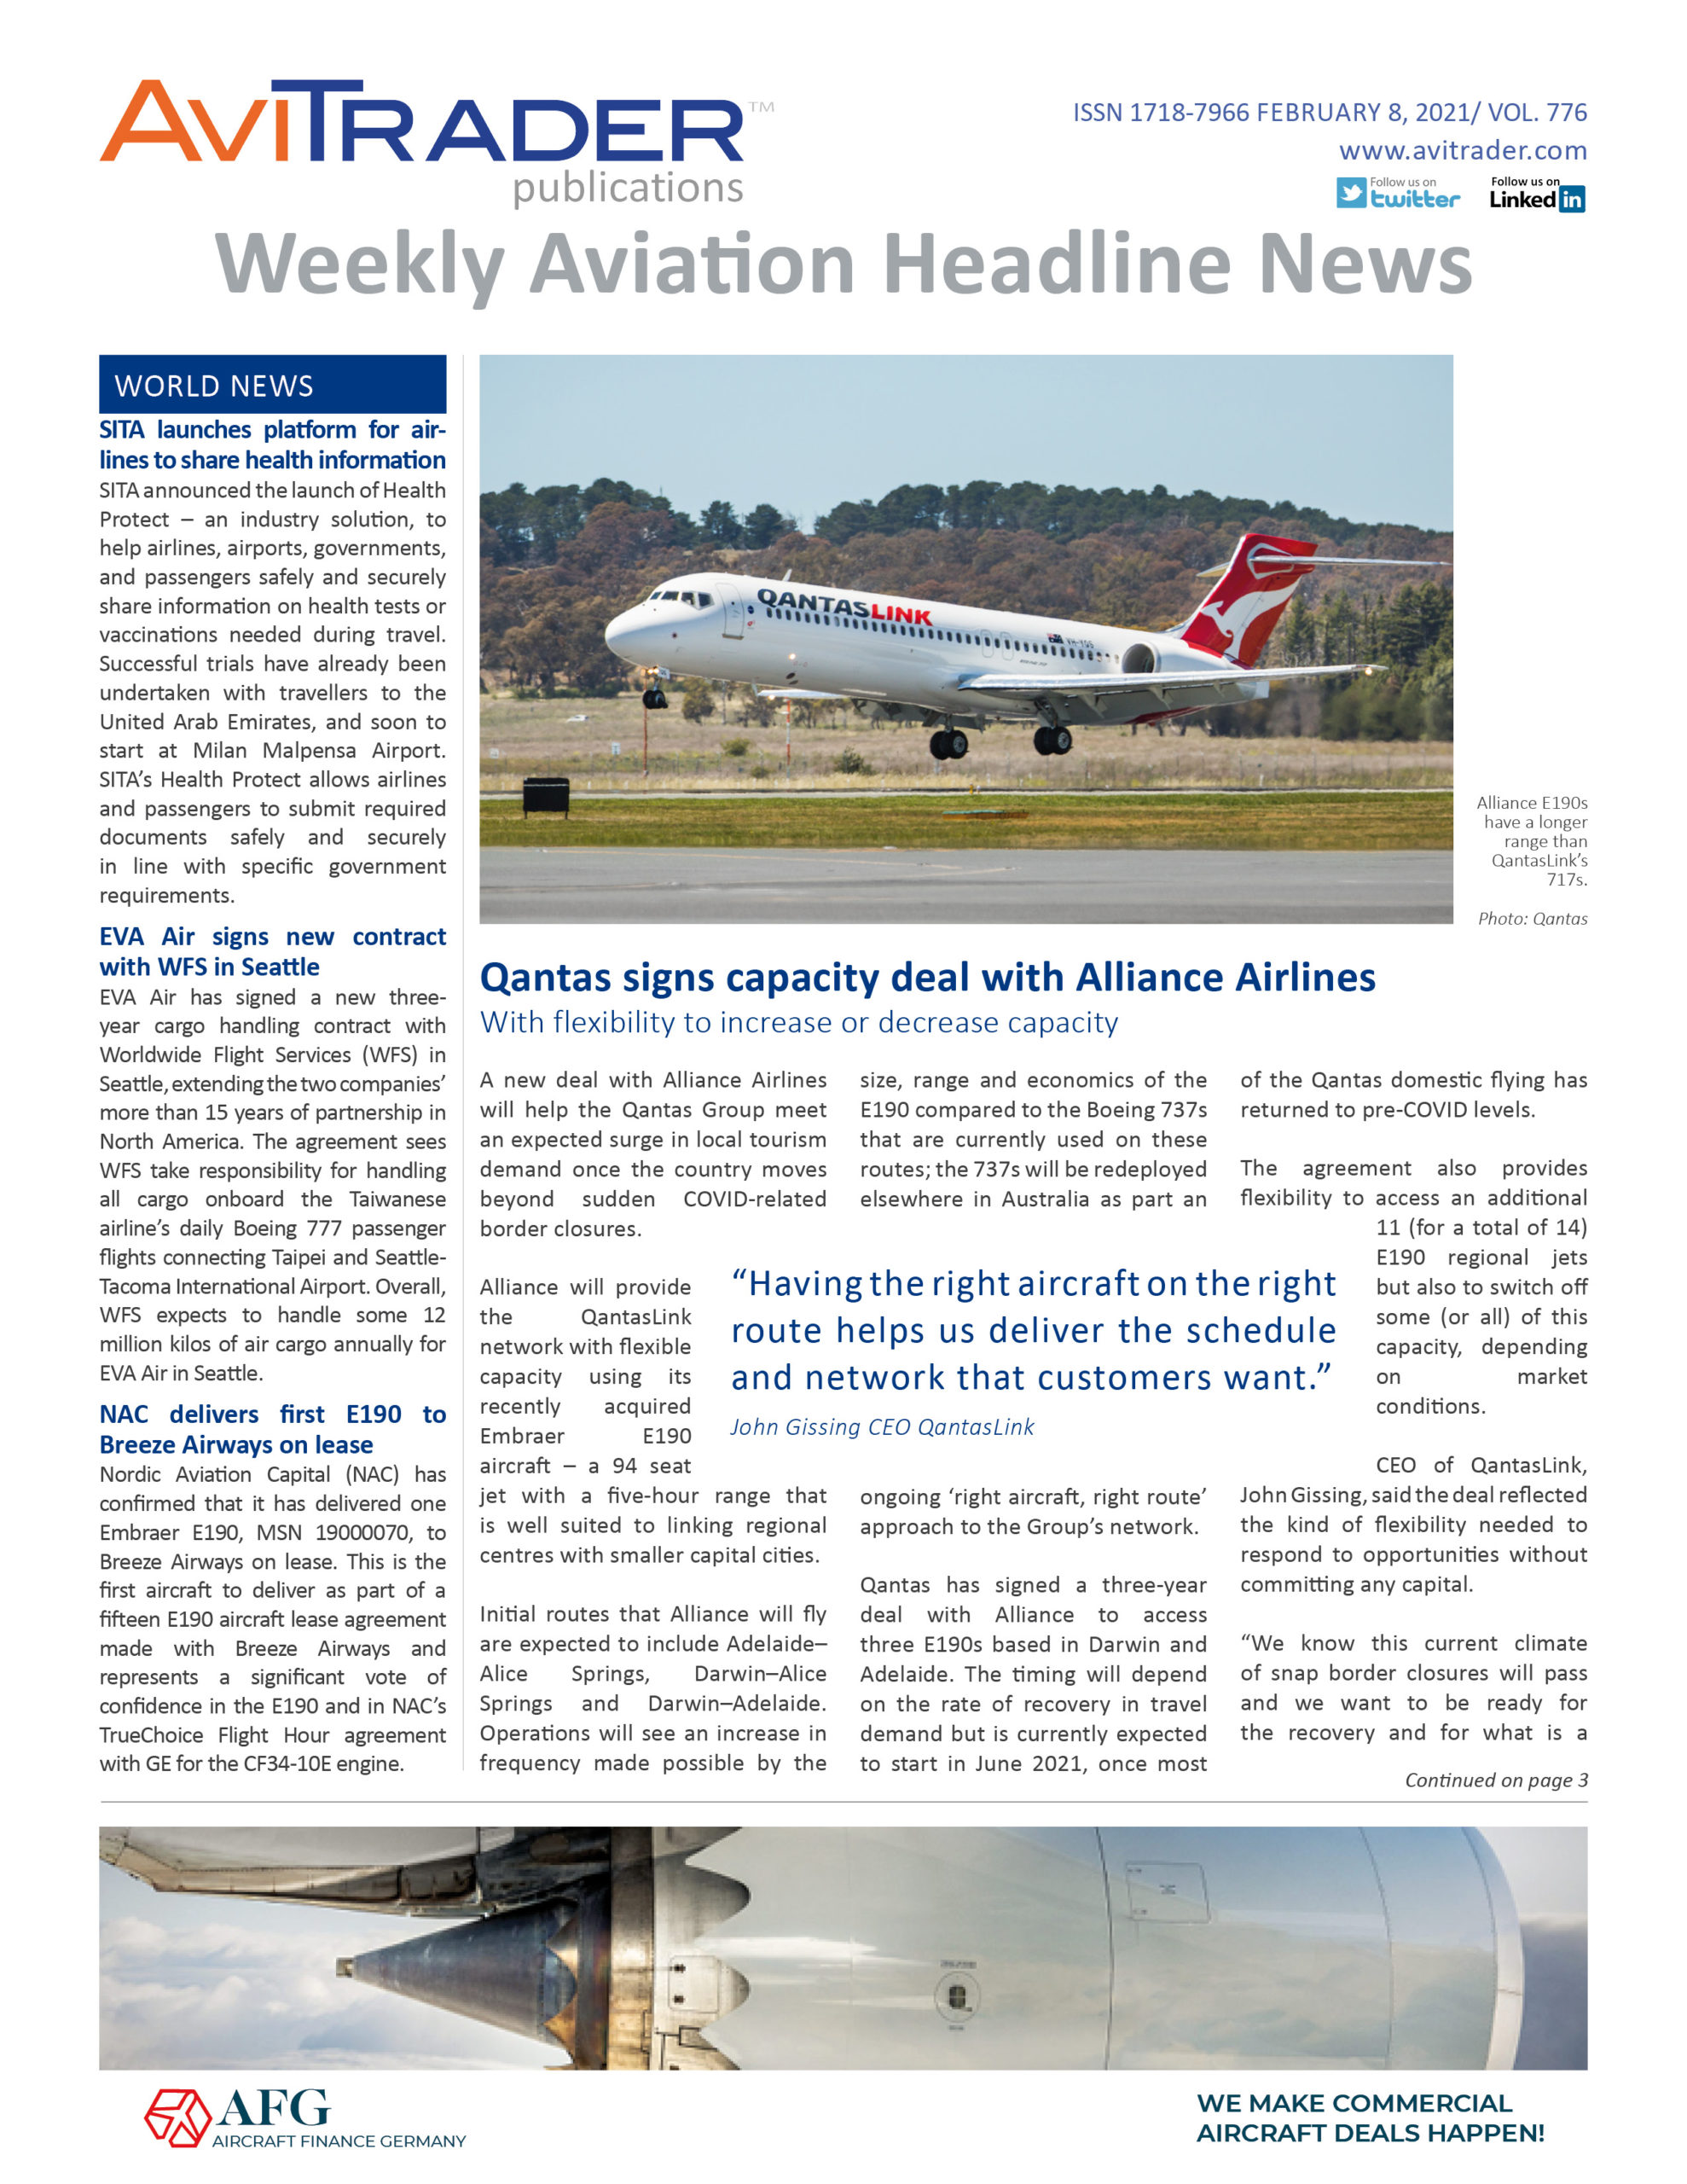 AviTrader_Weekly_Headline_News_Cover_2021-02-08